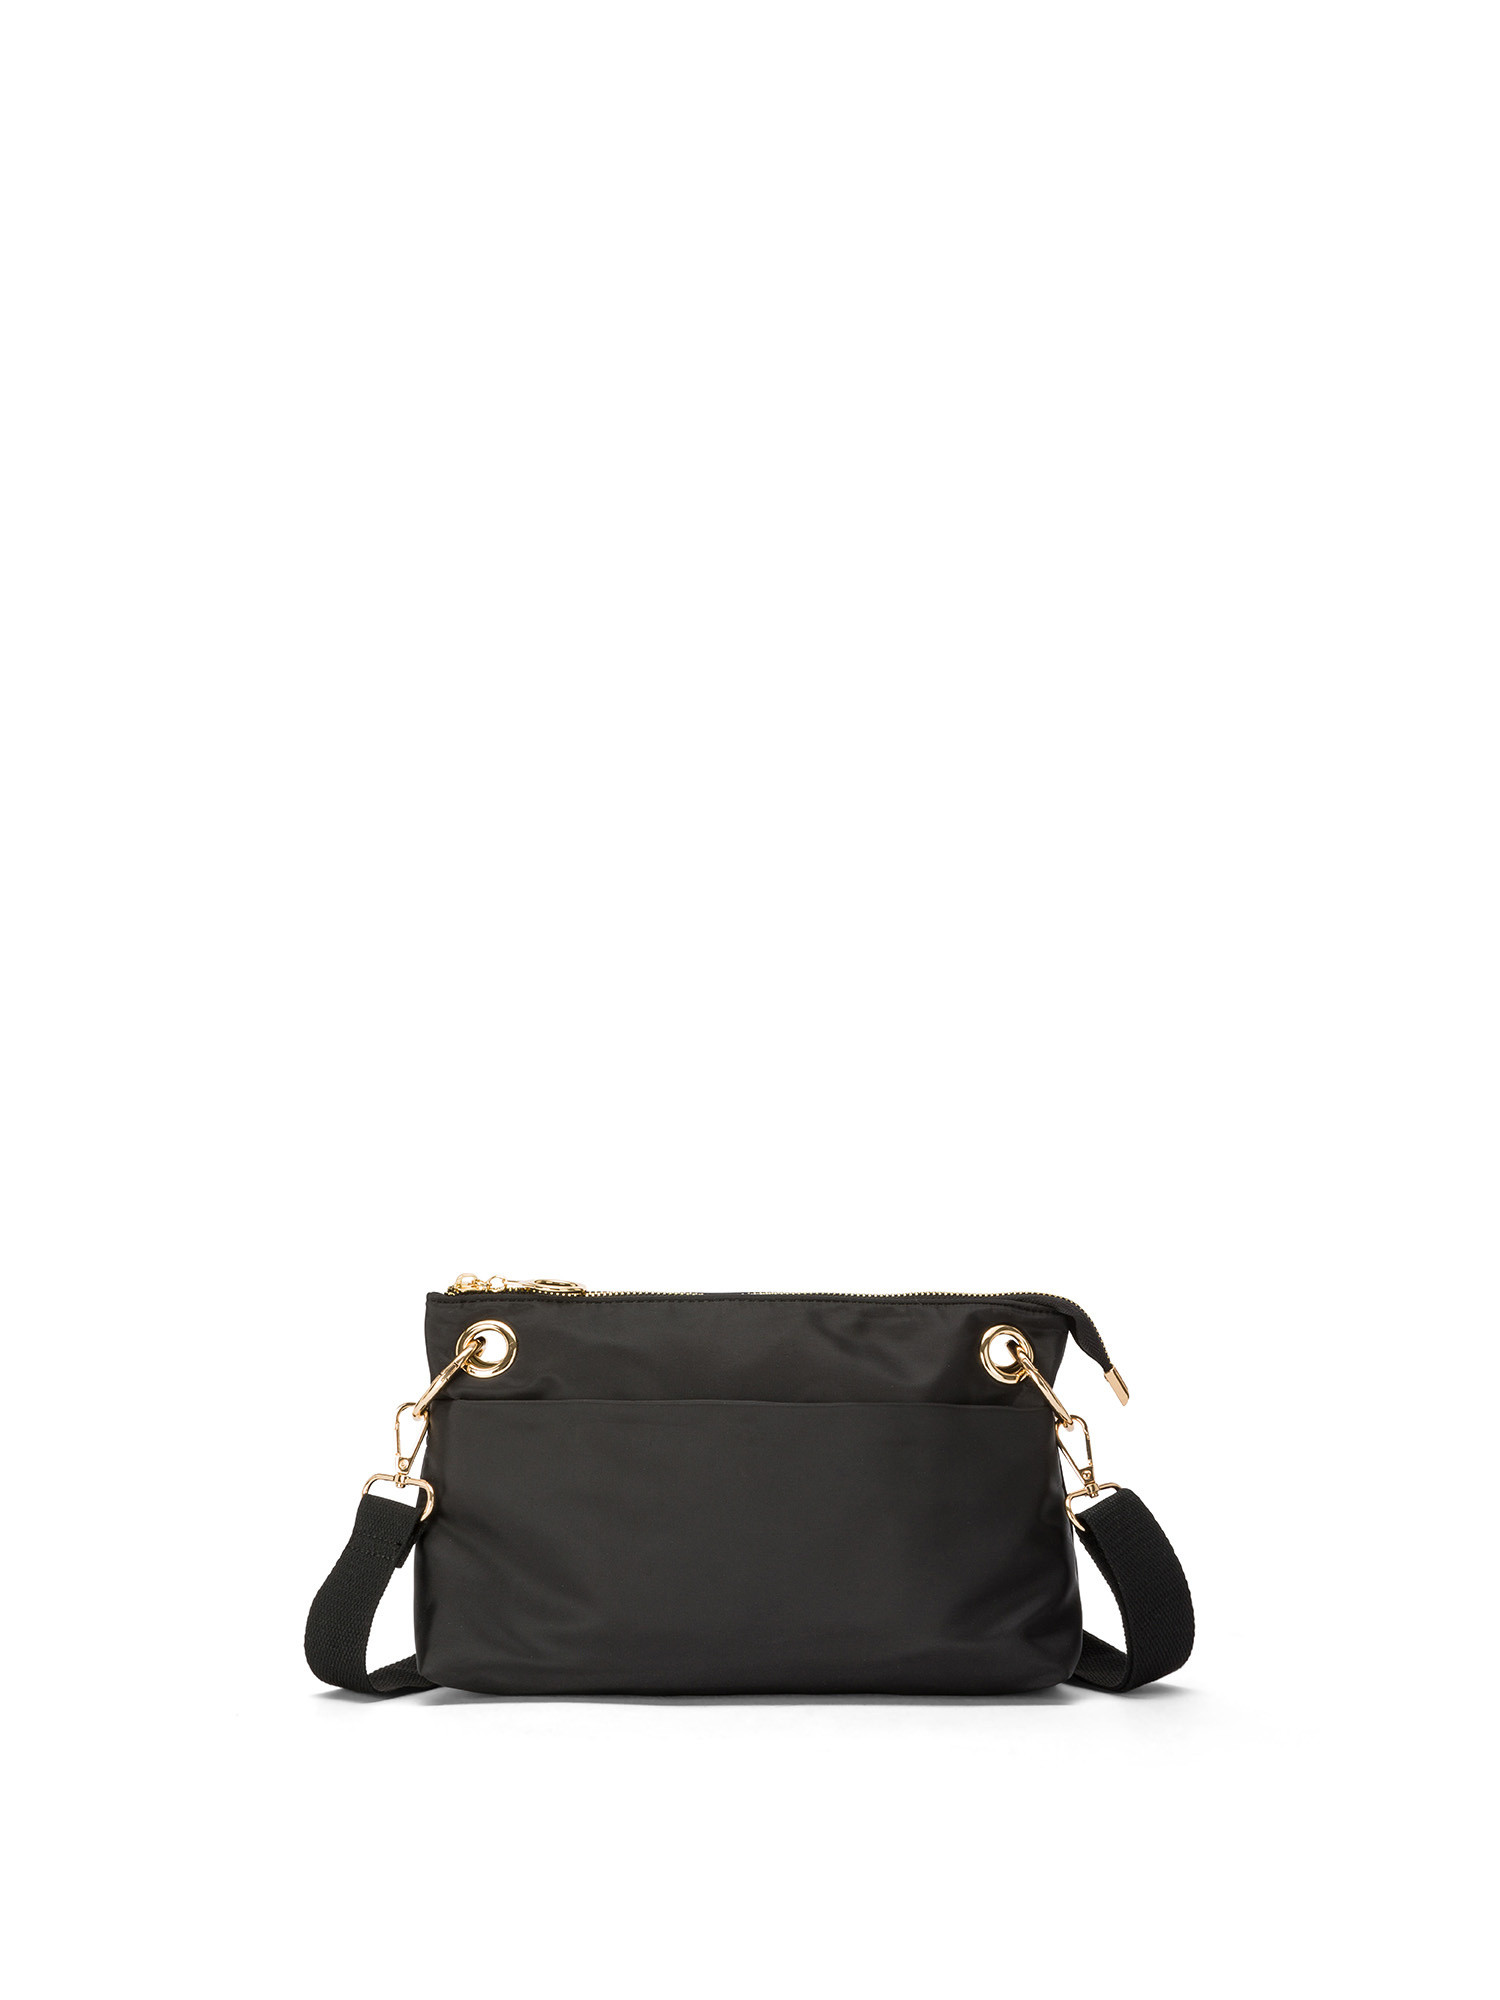 Koan - Messenger bag in nylon fabric, Black, large image number 0